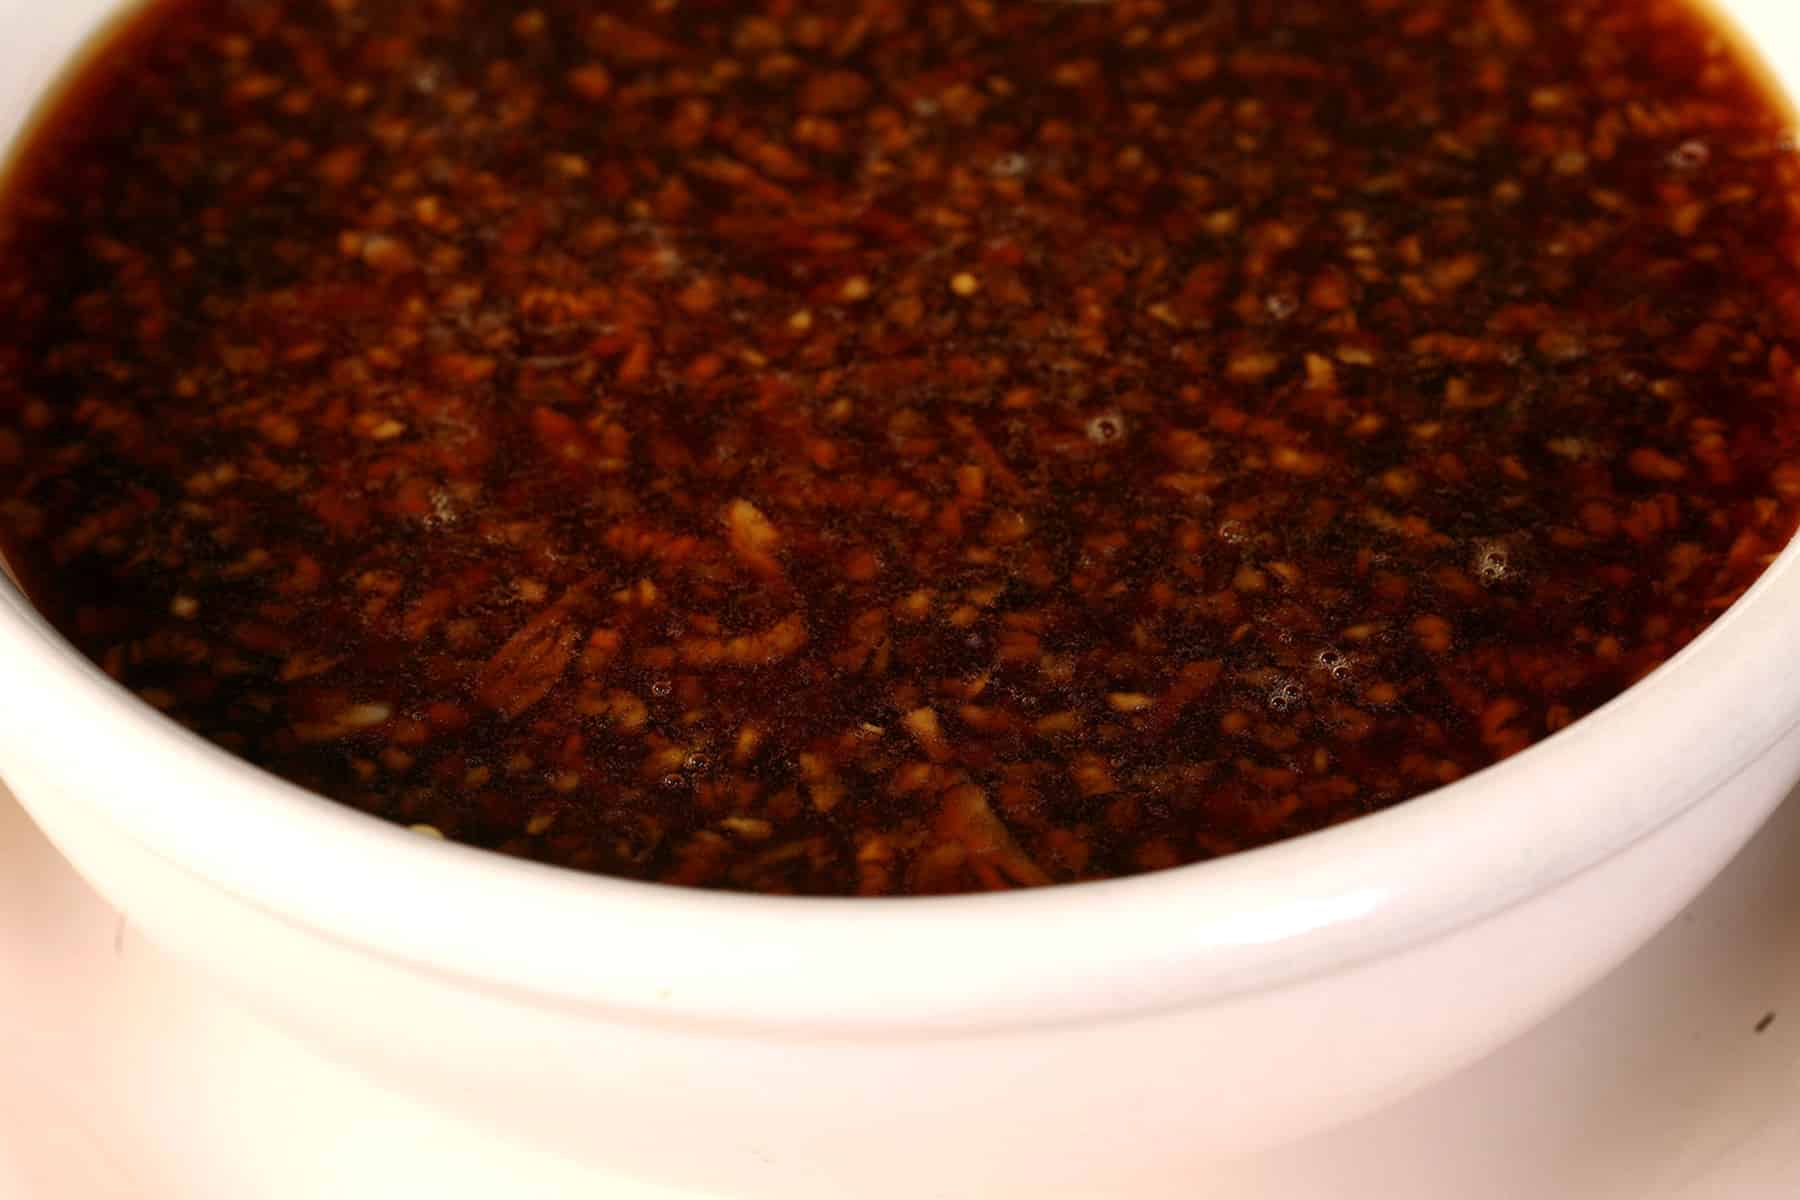 A bowl of homemade honey garlic sauce.